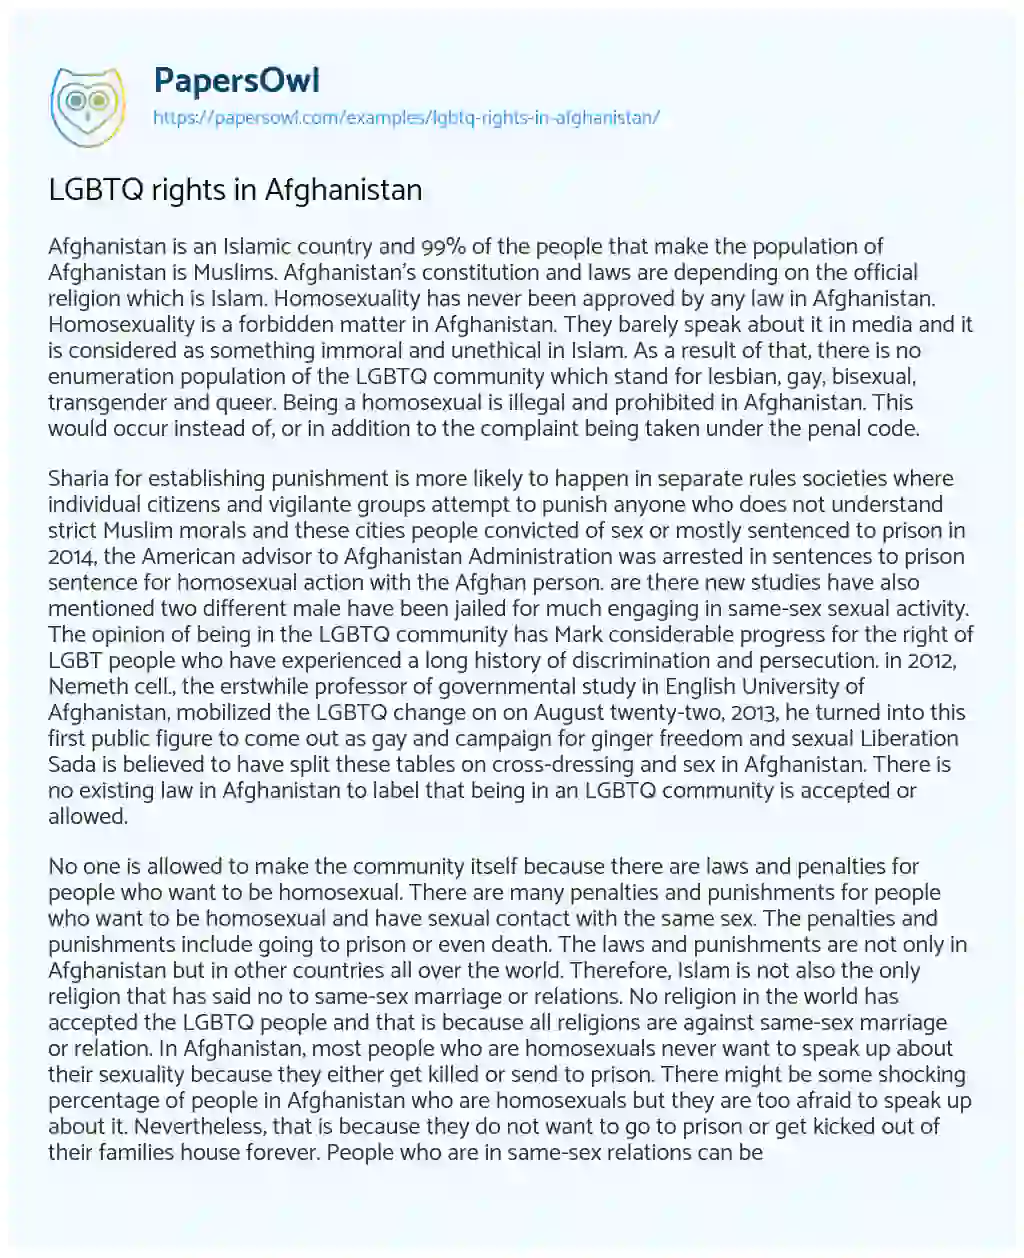 LGBTQ Rights in Afghanistan essay